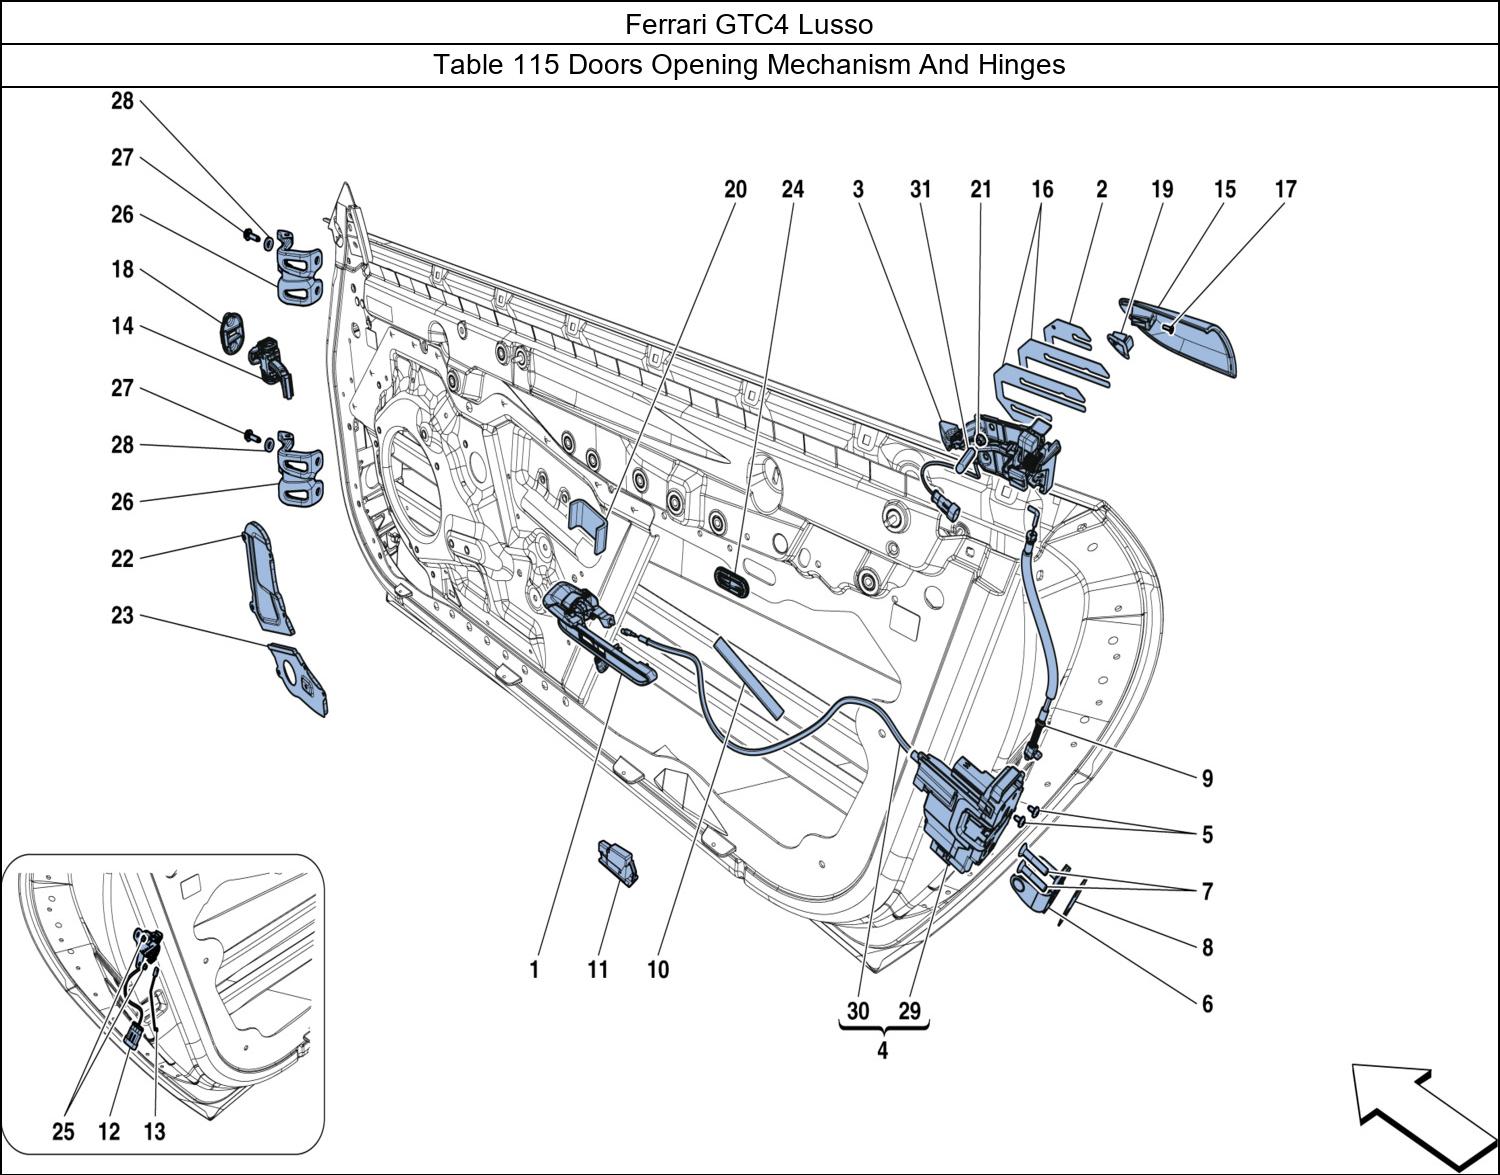 Ferrari Parts Ferrari GTC4 Lusso Table 115 Doors Opening Mechanism And Hinges